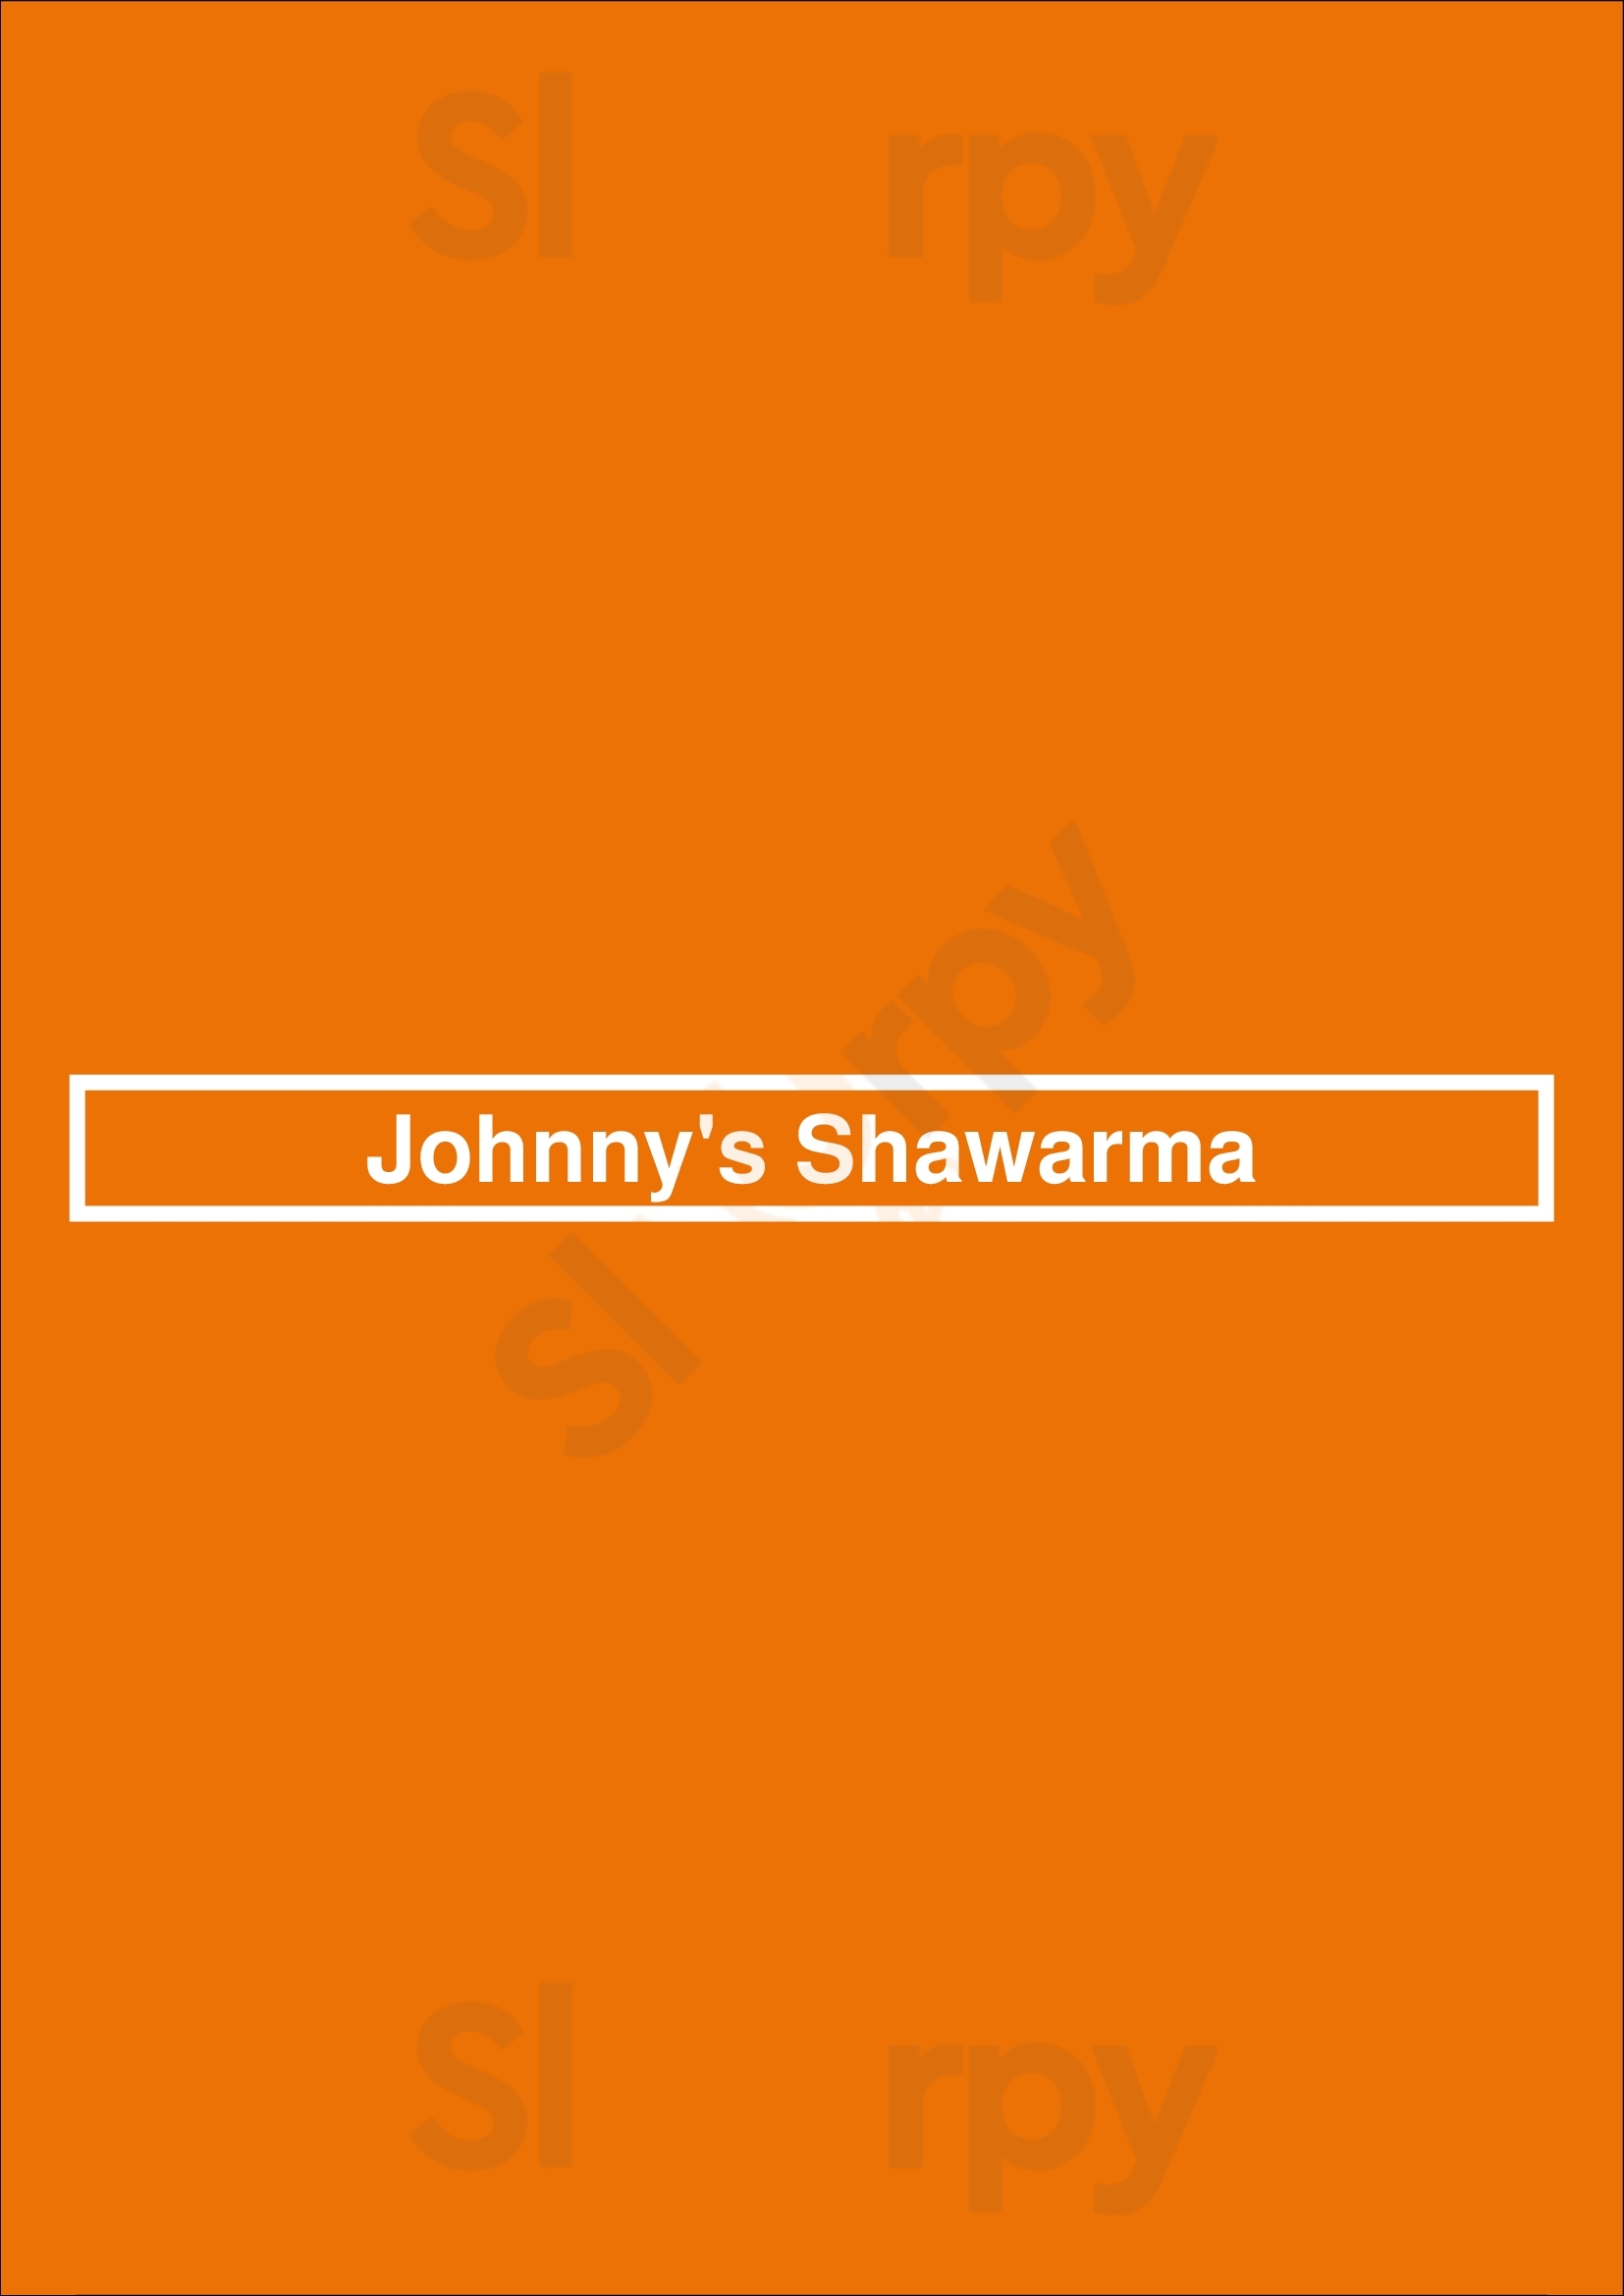 Johnny's Shawarma Toronto Menu - 1